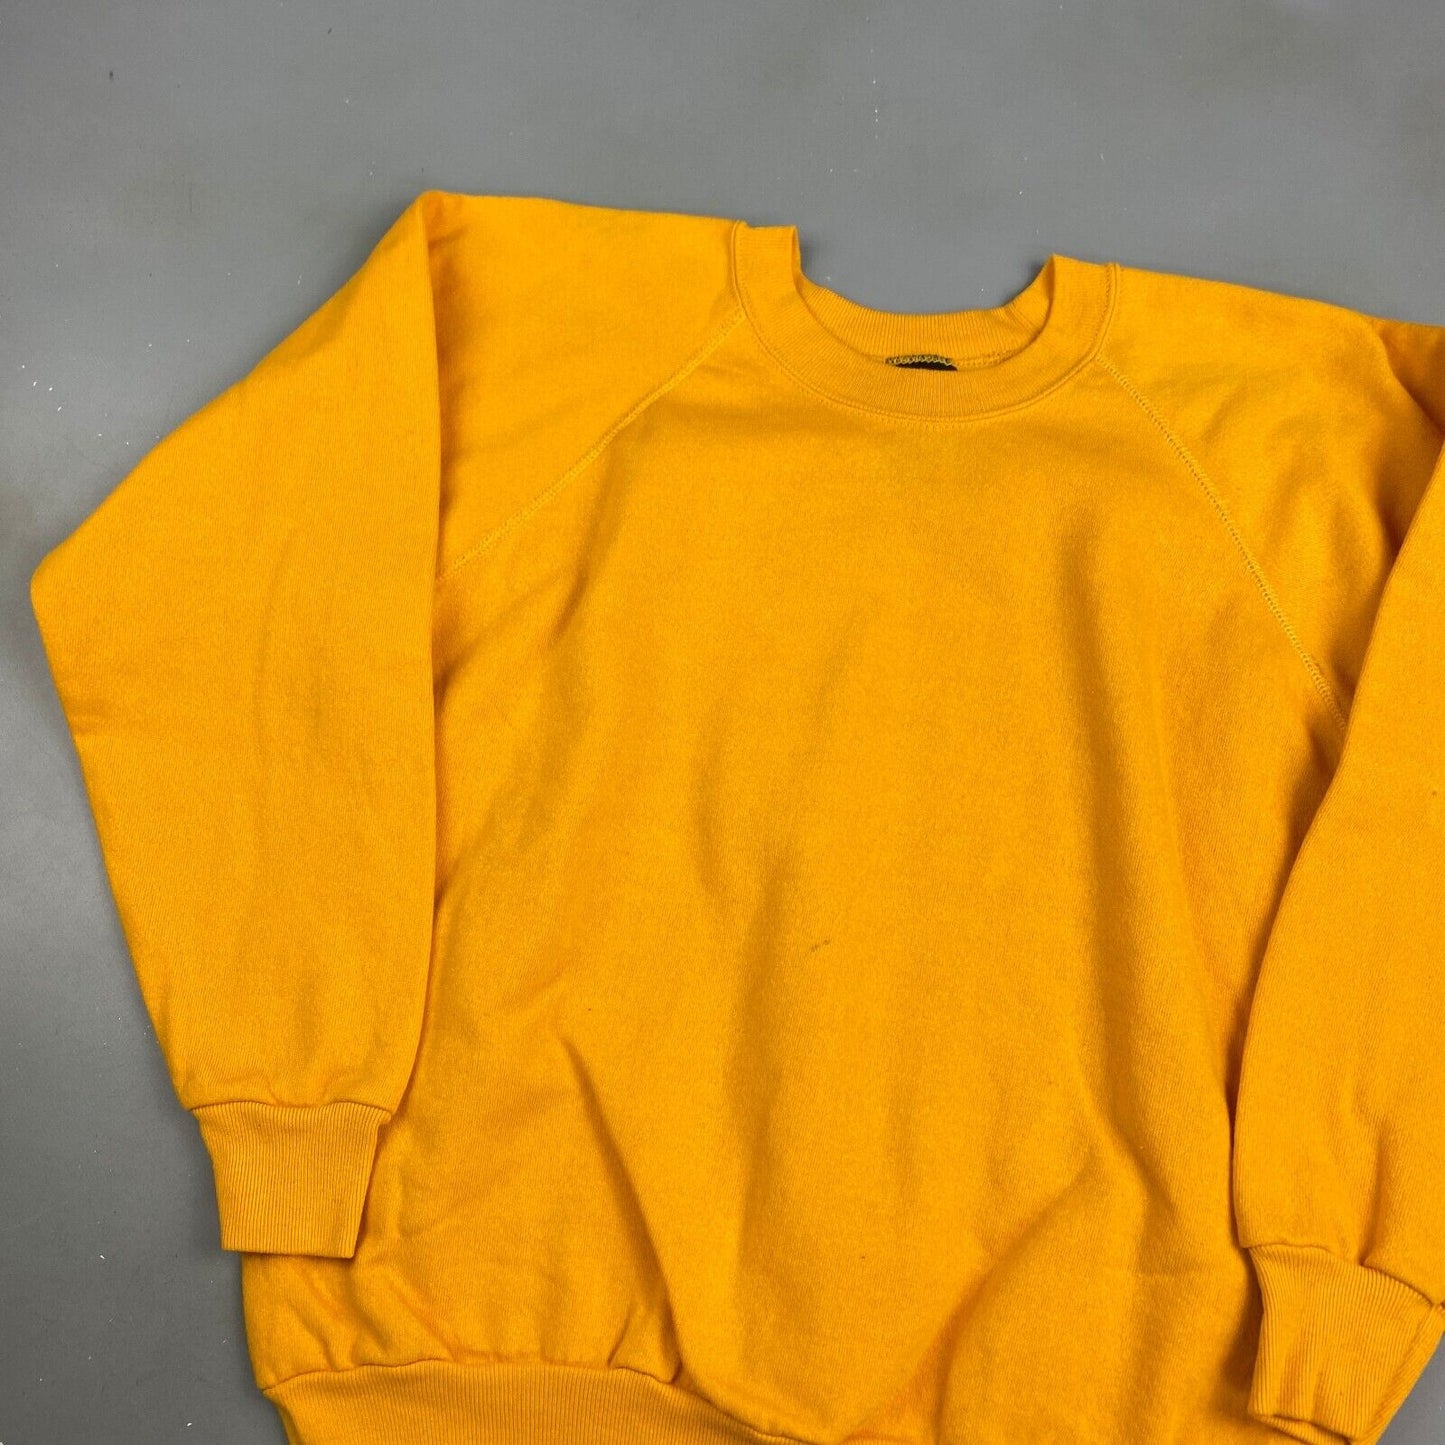 VINTAGE 90s Blank Yellow Crewneck Sweater sz Large Adult Men MadeinUSA